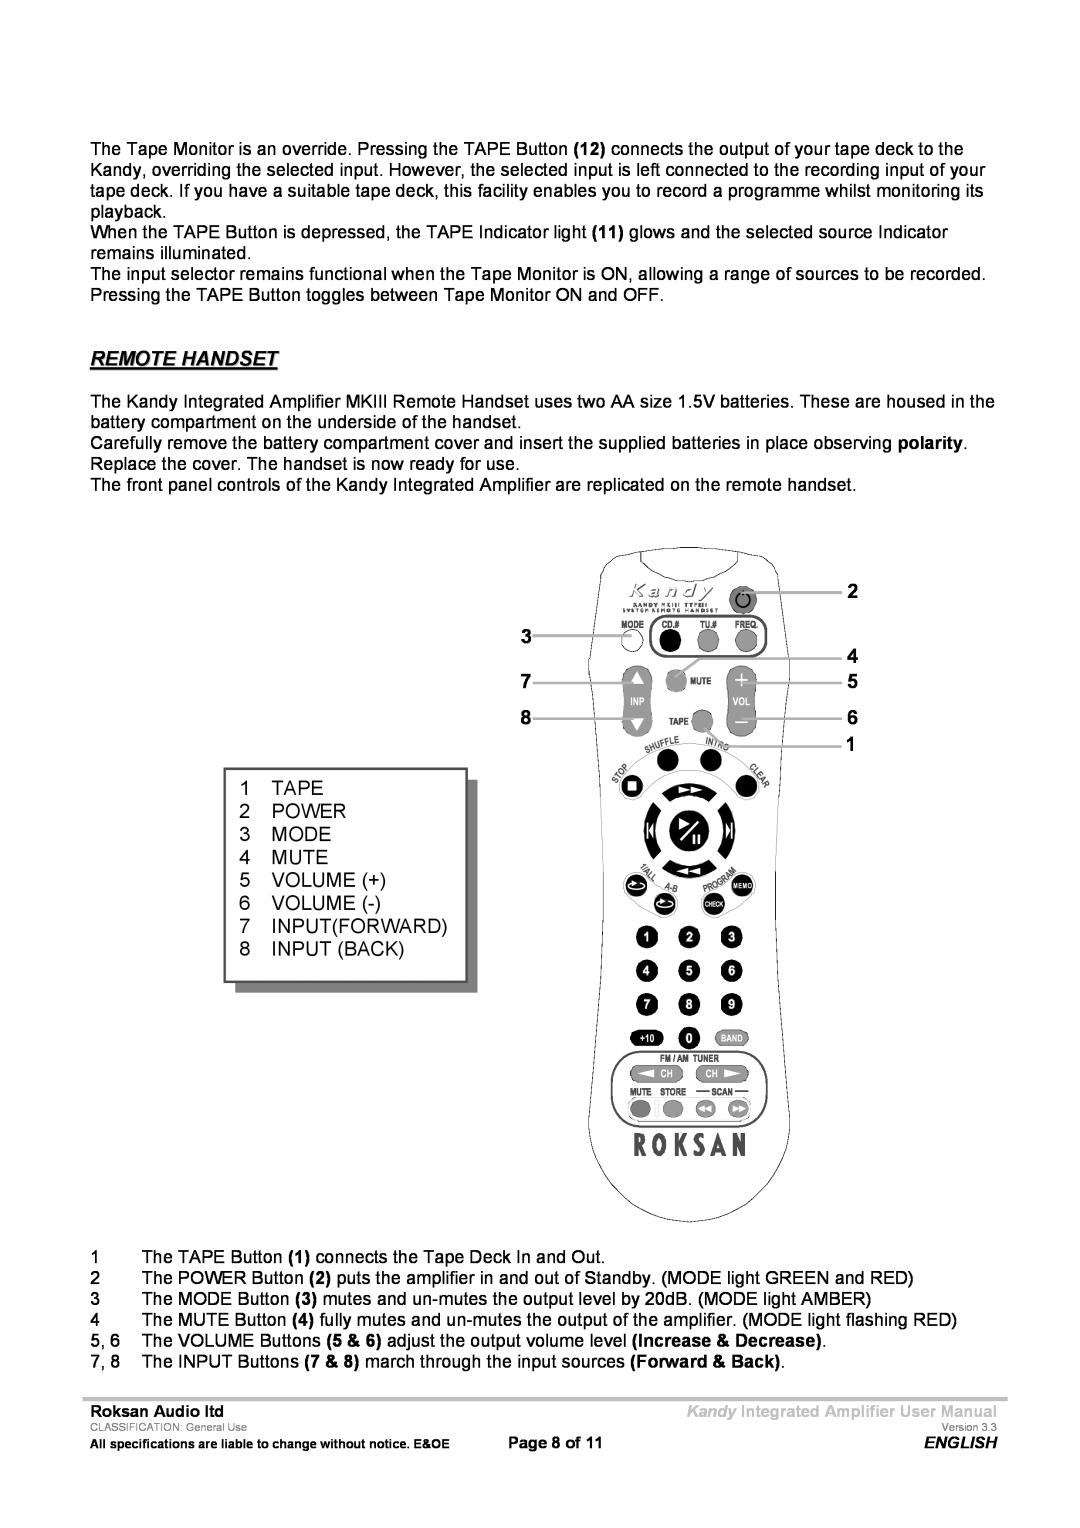 Roksan Audio LIII user manual Remote Handset, TAPE 2 POWER 3 MODE 4 MUTE 5 VOLUME + 6 VOLUME, INPUTFORWARD 8 INPUT BACK 